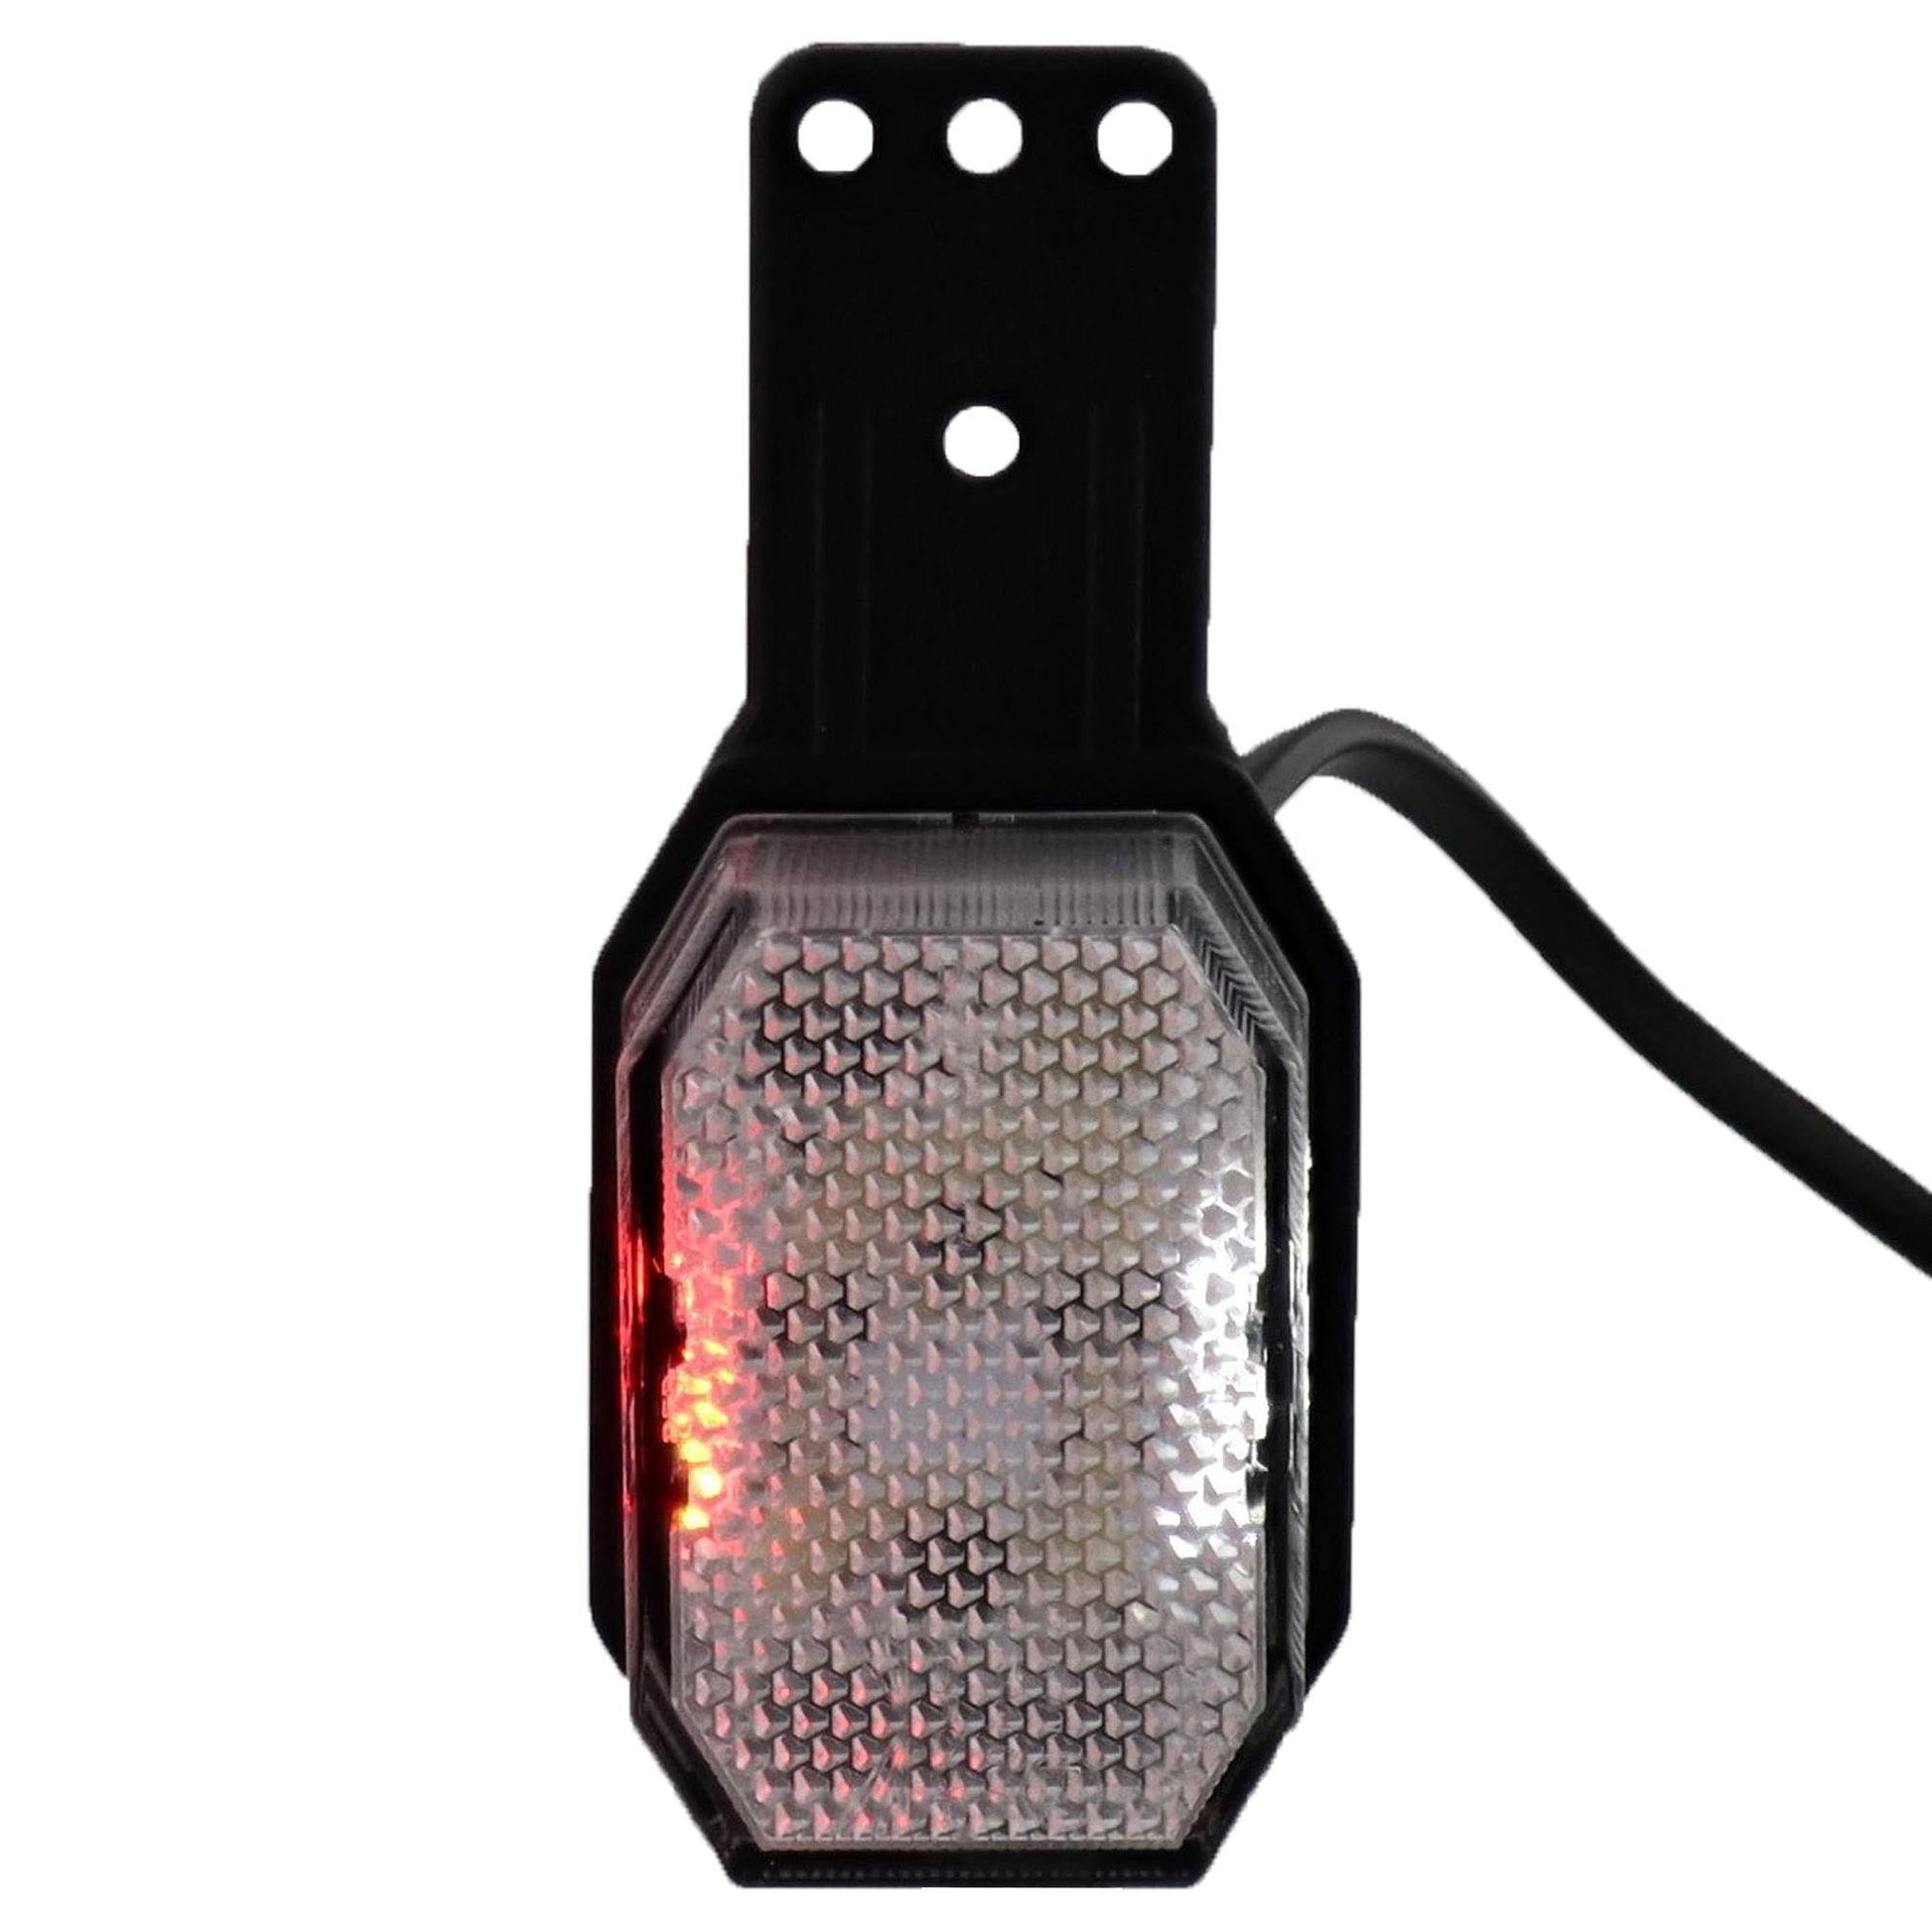 Flexipoint LED Umrissleuchte rot/weiss DC 0,5m Kabel rechts - TMN-shop.de